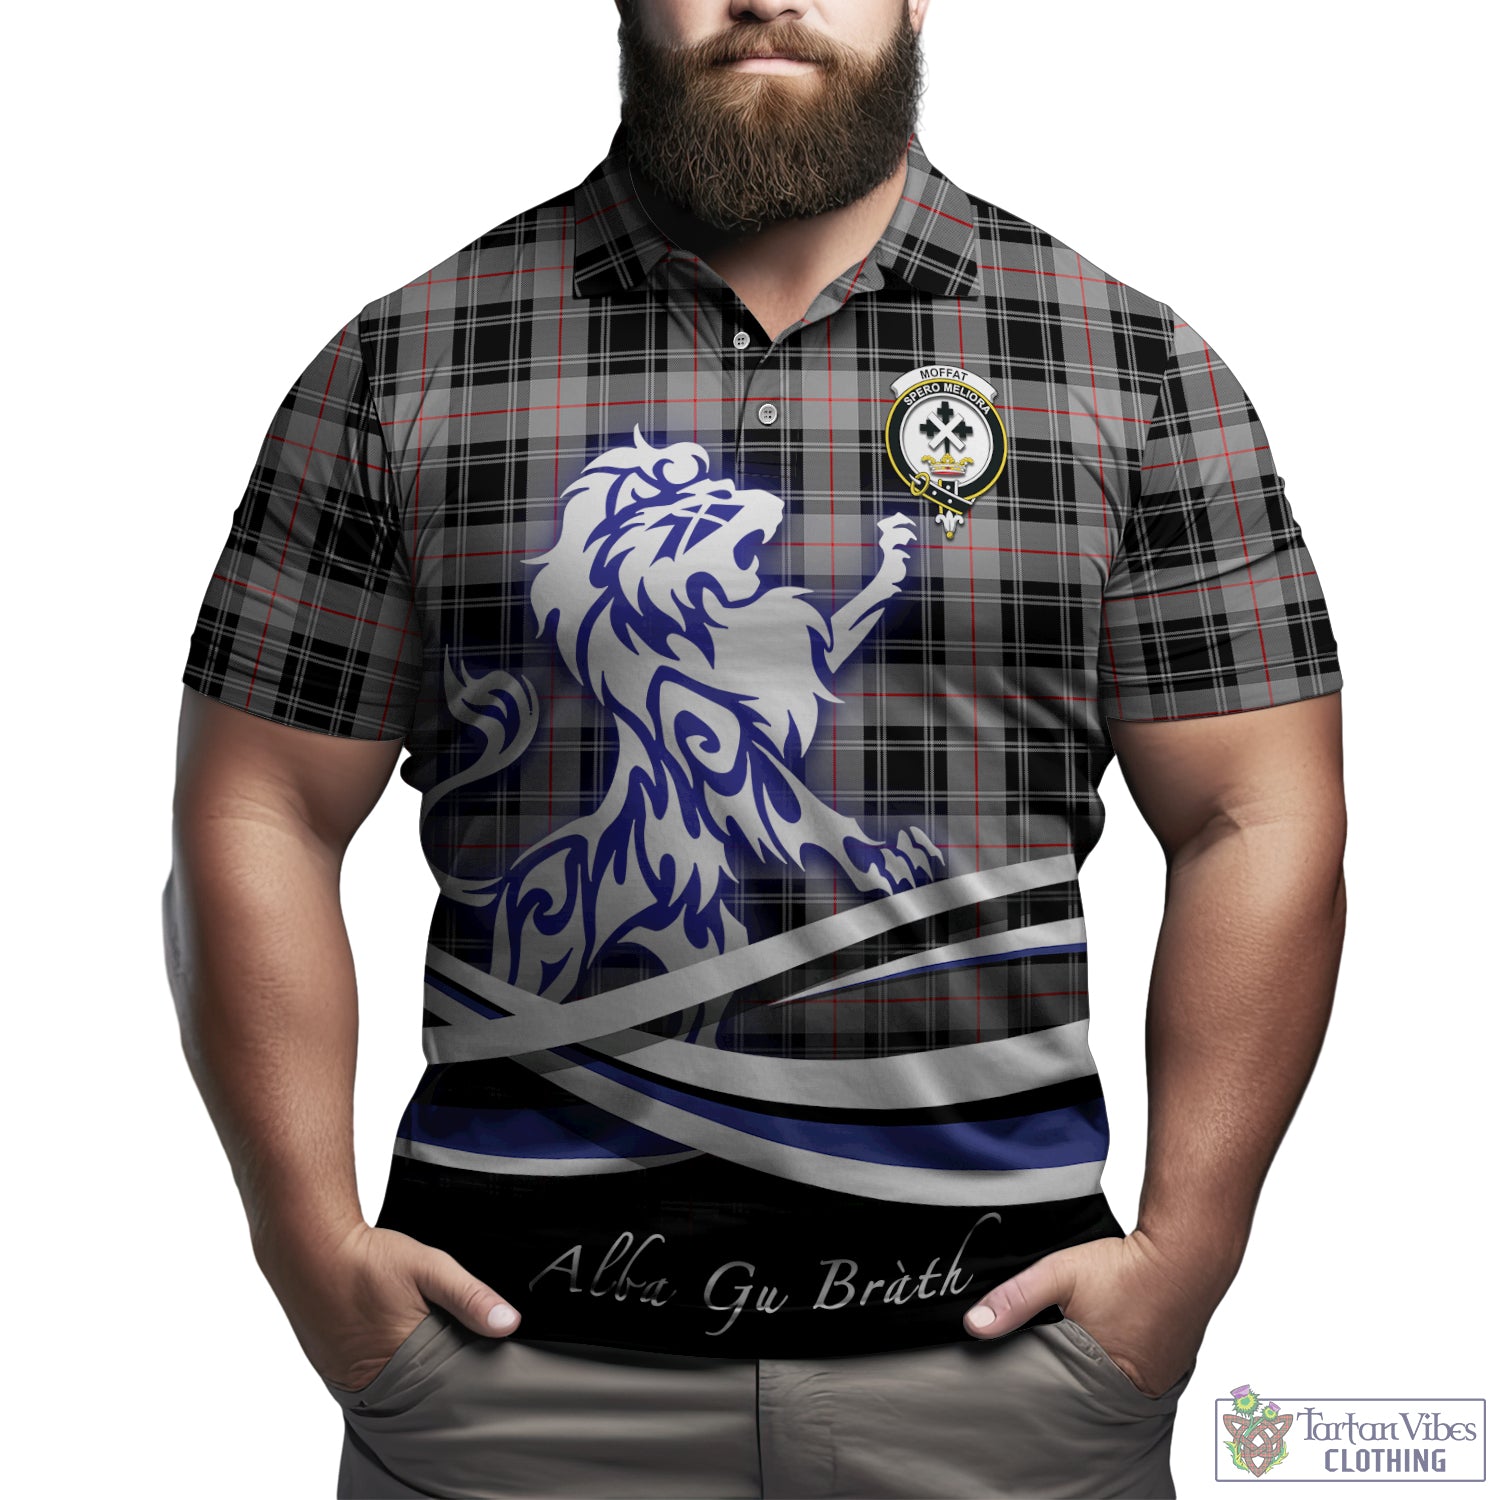 moffat-modern-tartan-polo-shirt-with-alba-gu-brath-regal-lion-emblem